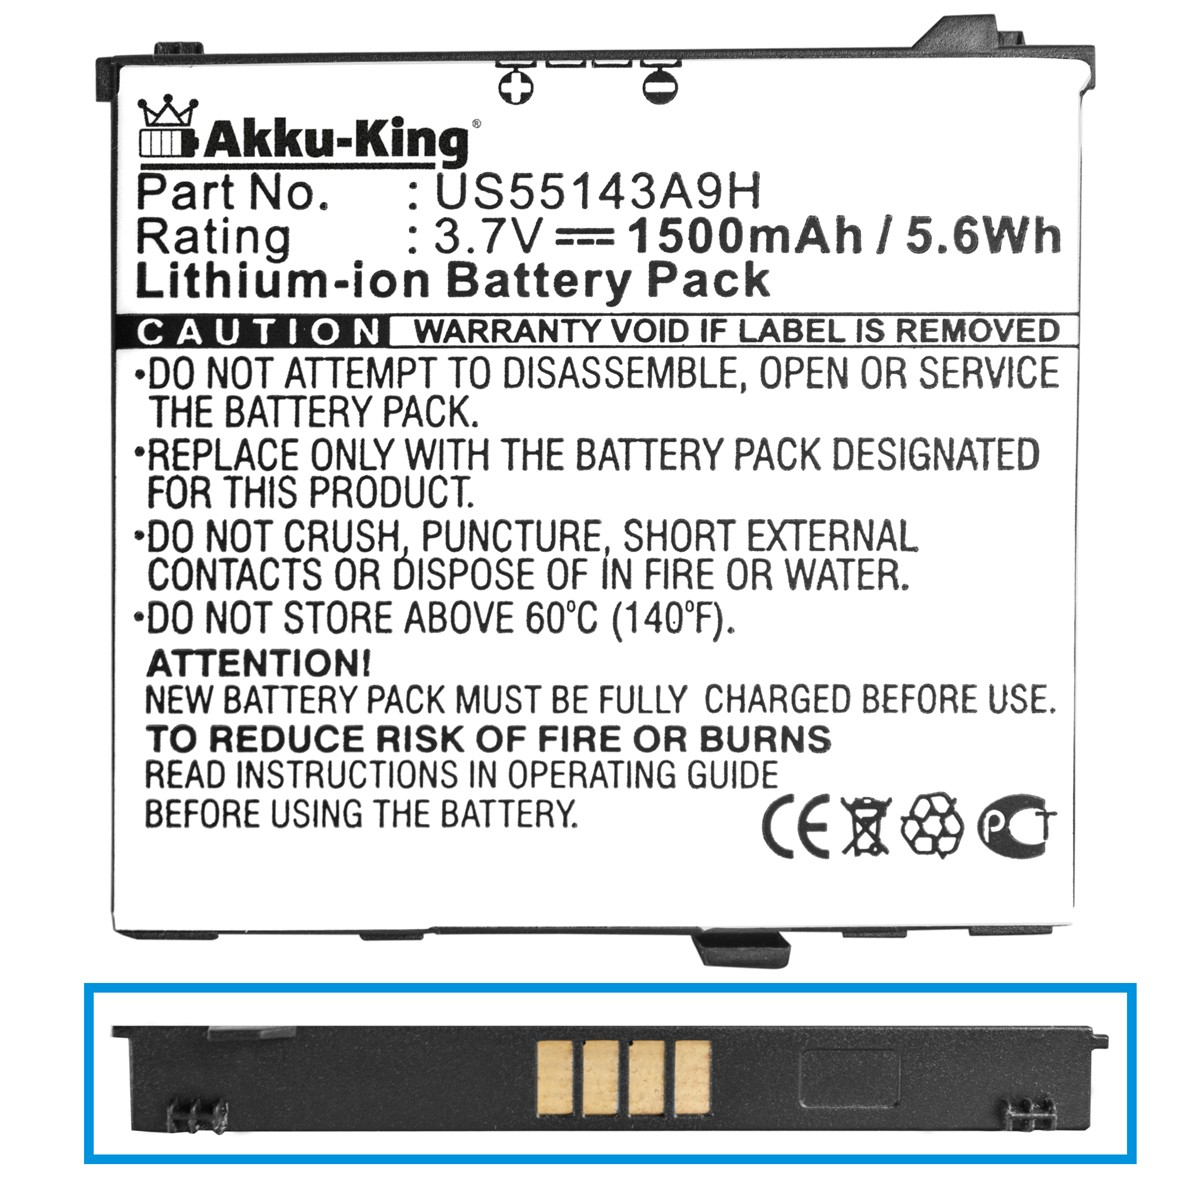 Akku Volt, Handy-Akku, Acer für Li-Ion US55143A9H 1500mAh 3.7 AKKU-KING